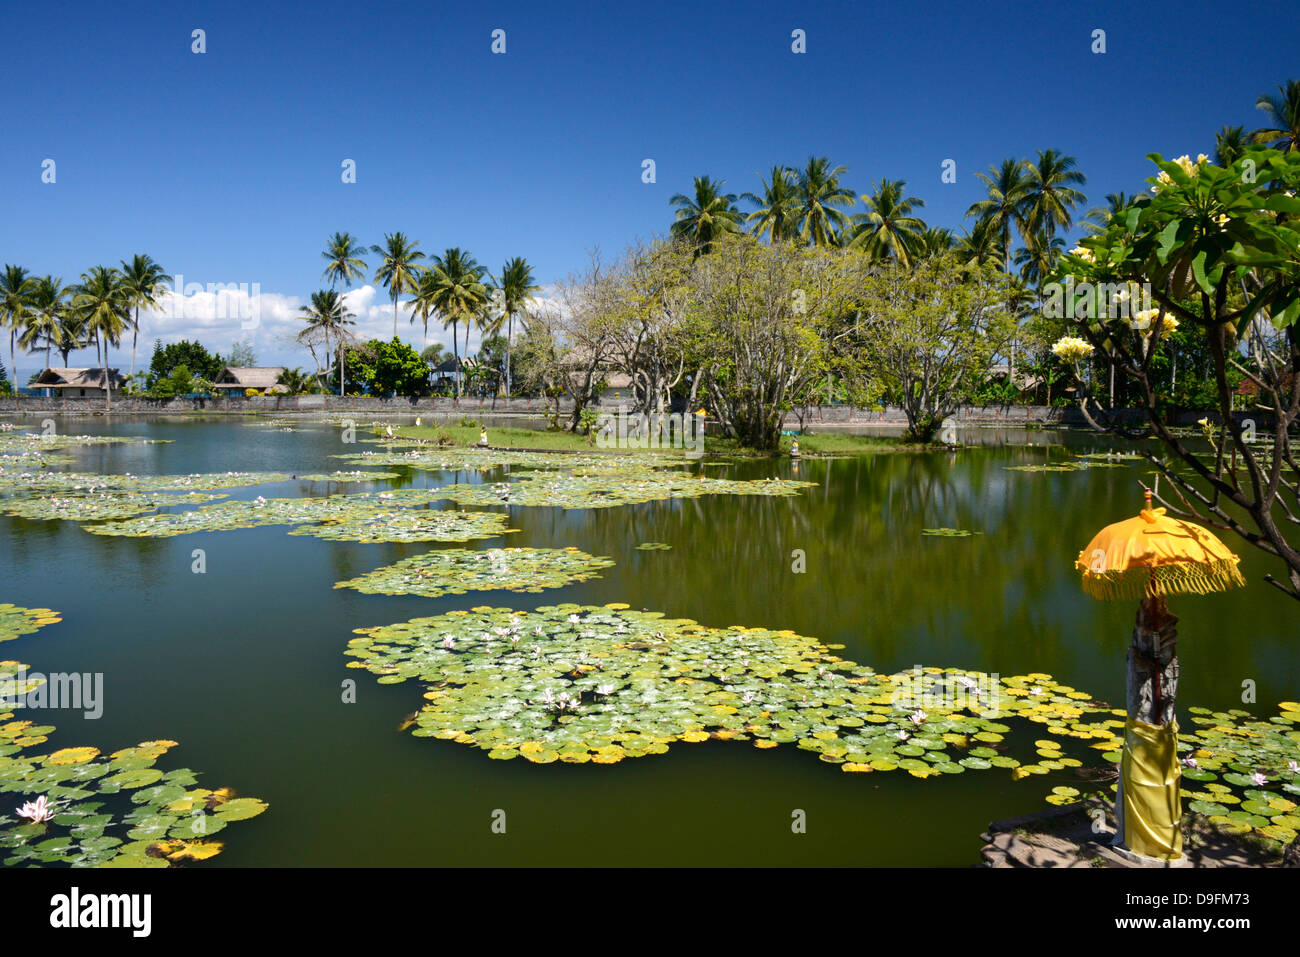 Lily pond, Candi Dasa, Bali, Indonesia, Southeast Asia Stock Photo